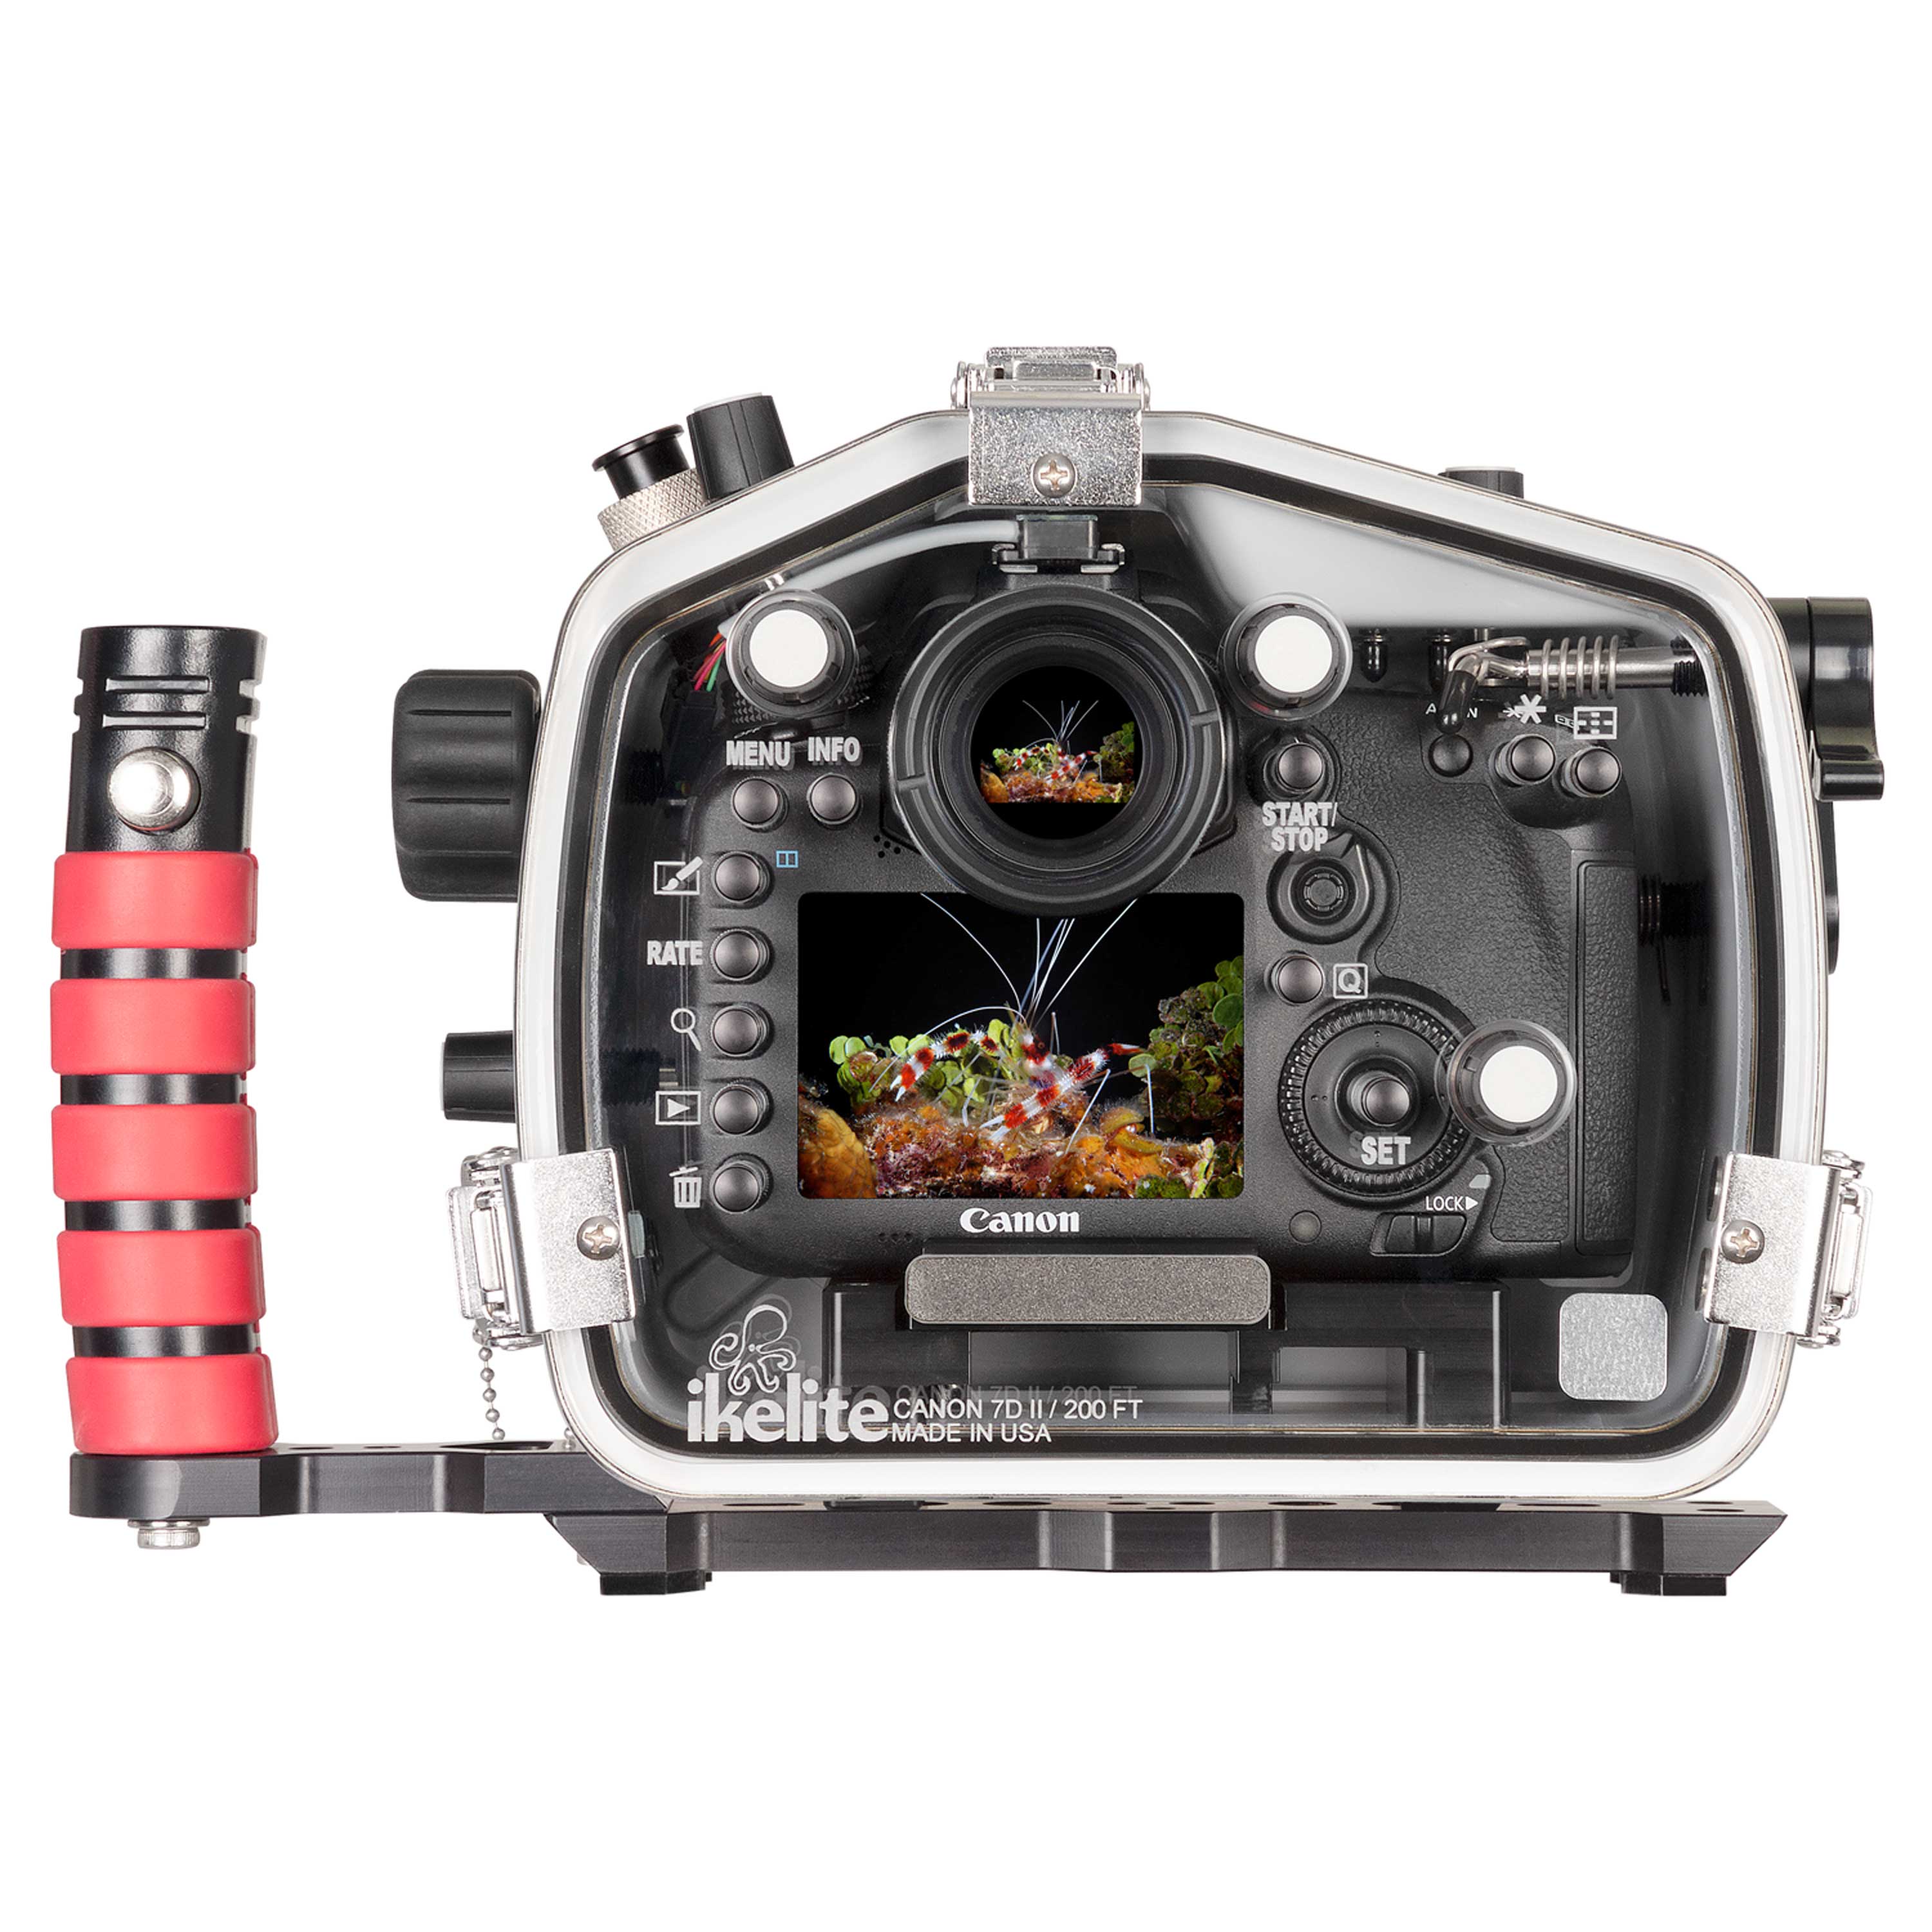 Miljard weekend toewijzing 200DL Underwater Housing for Canon EOS 7D Mark II DSLR Cameras